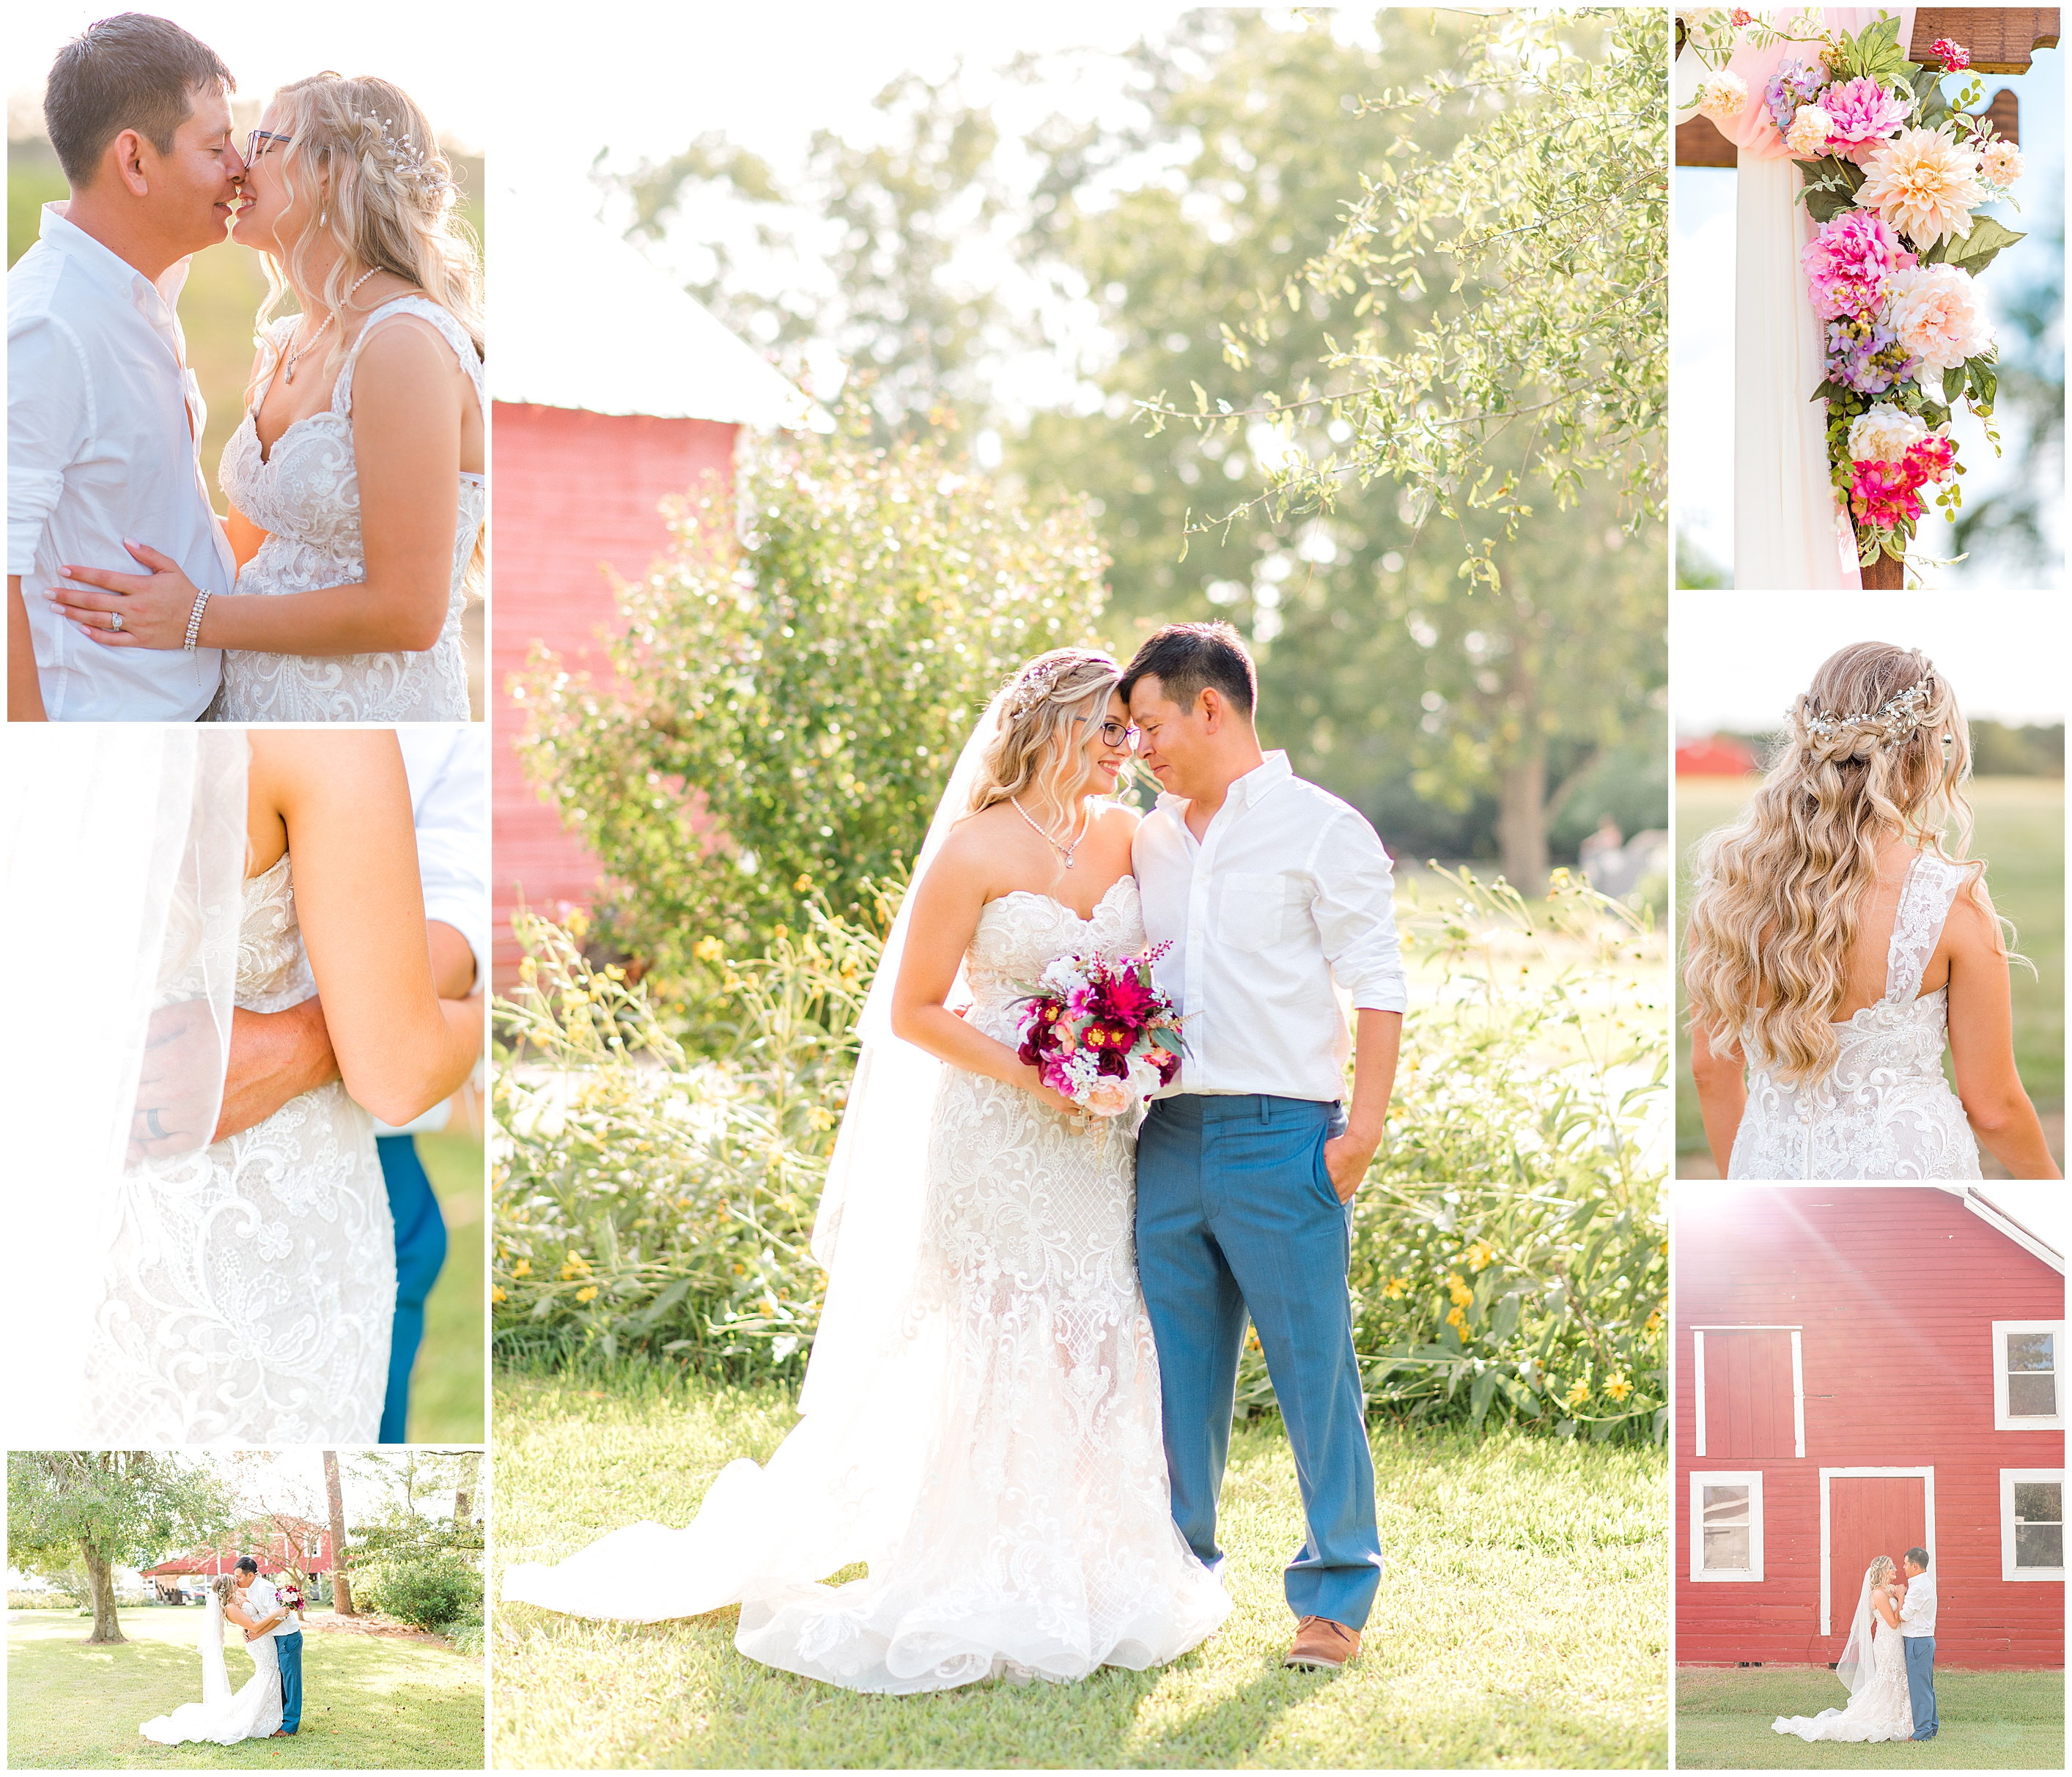 Wedding Collage | Kyle’s Farm North Carolina | by Kaitlyn Blake Photography